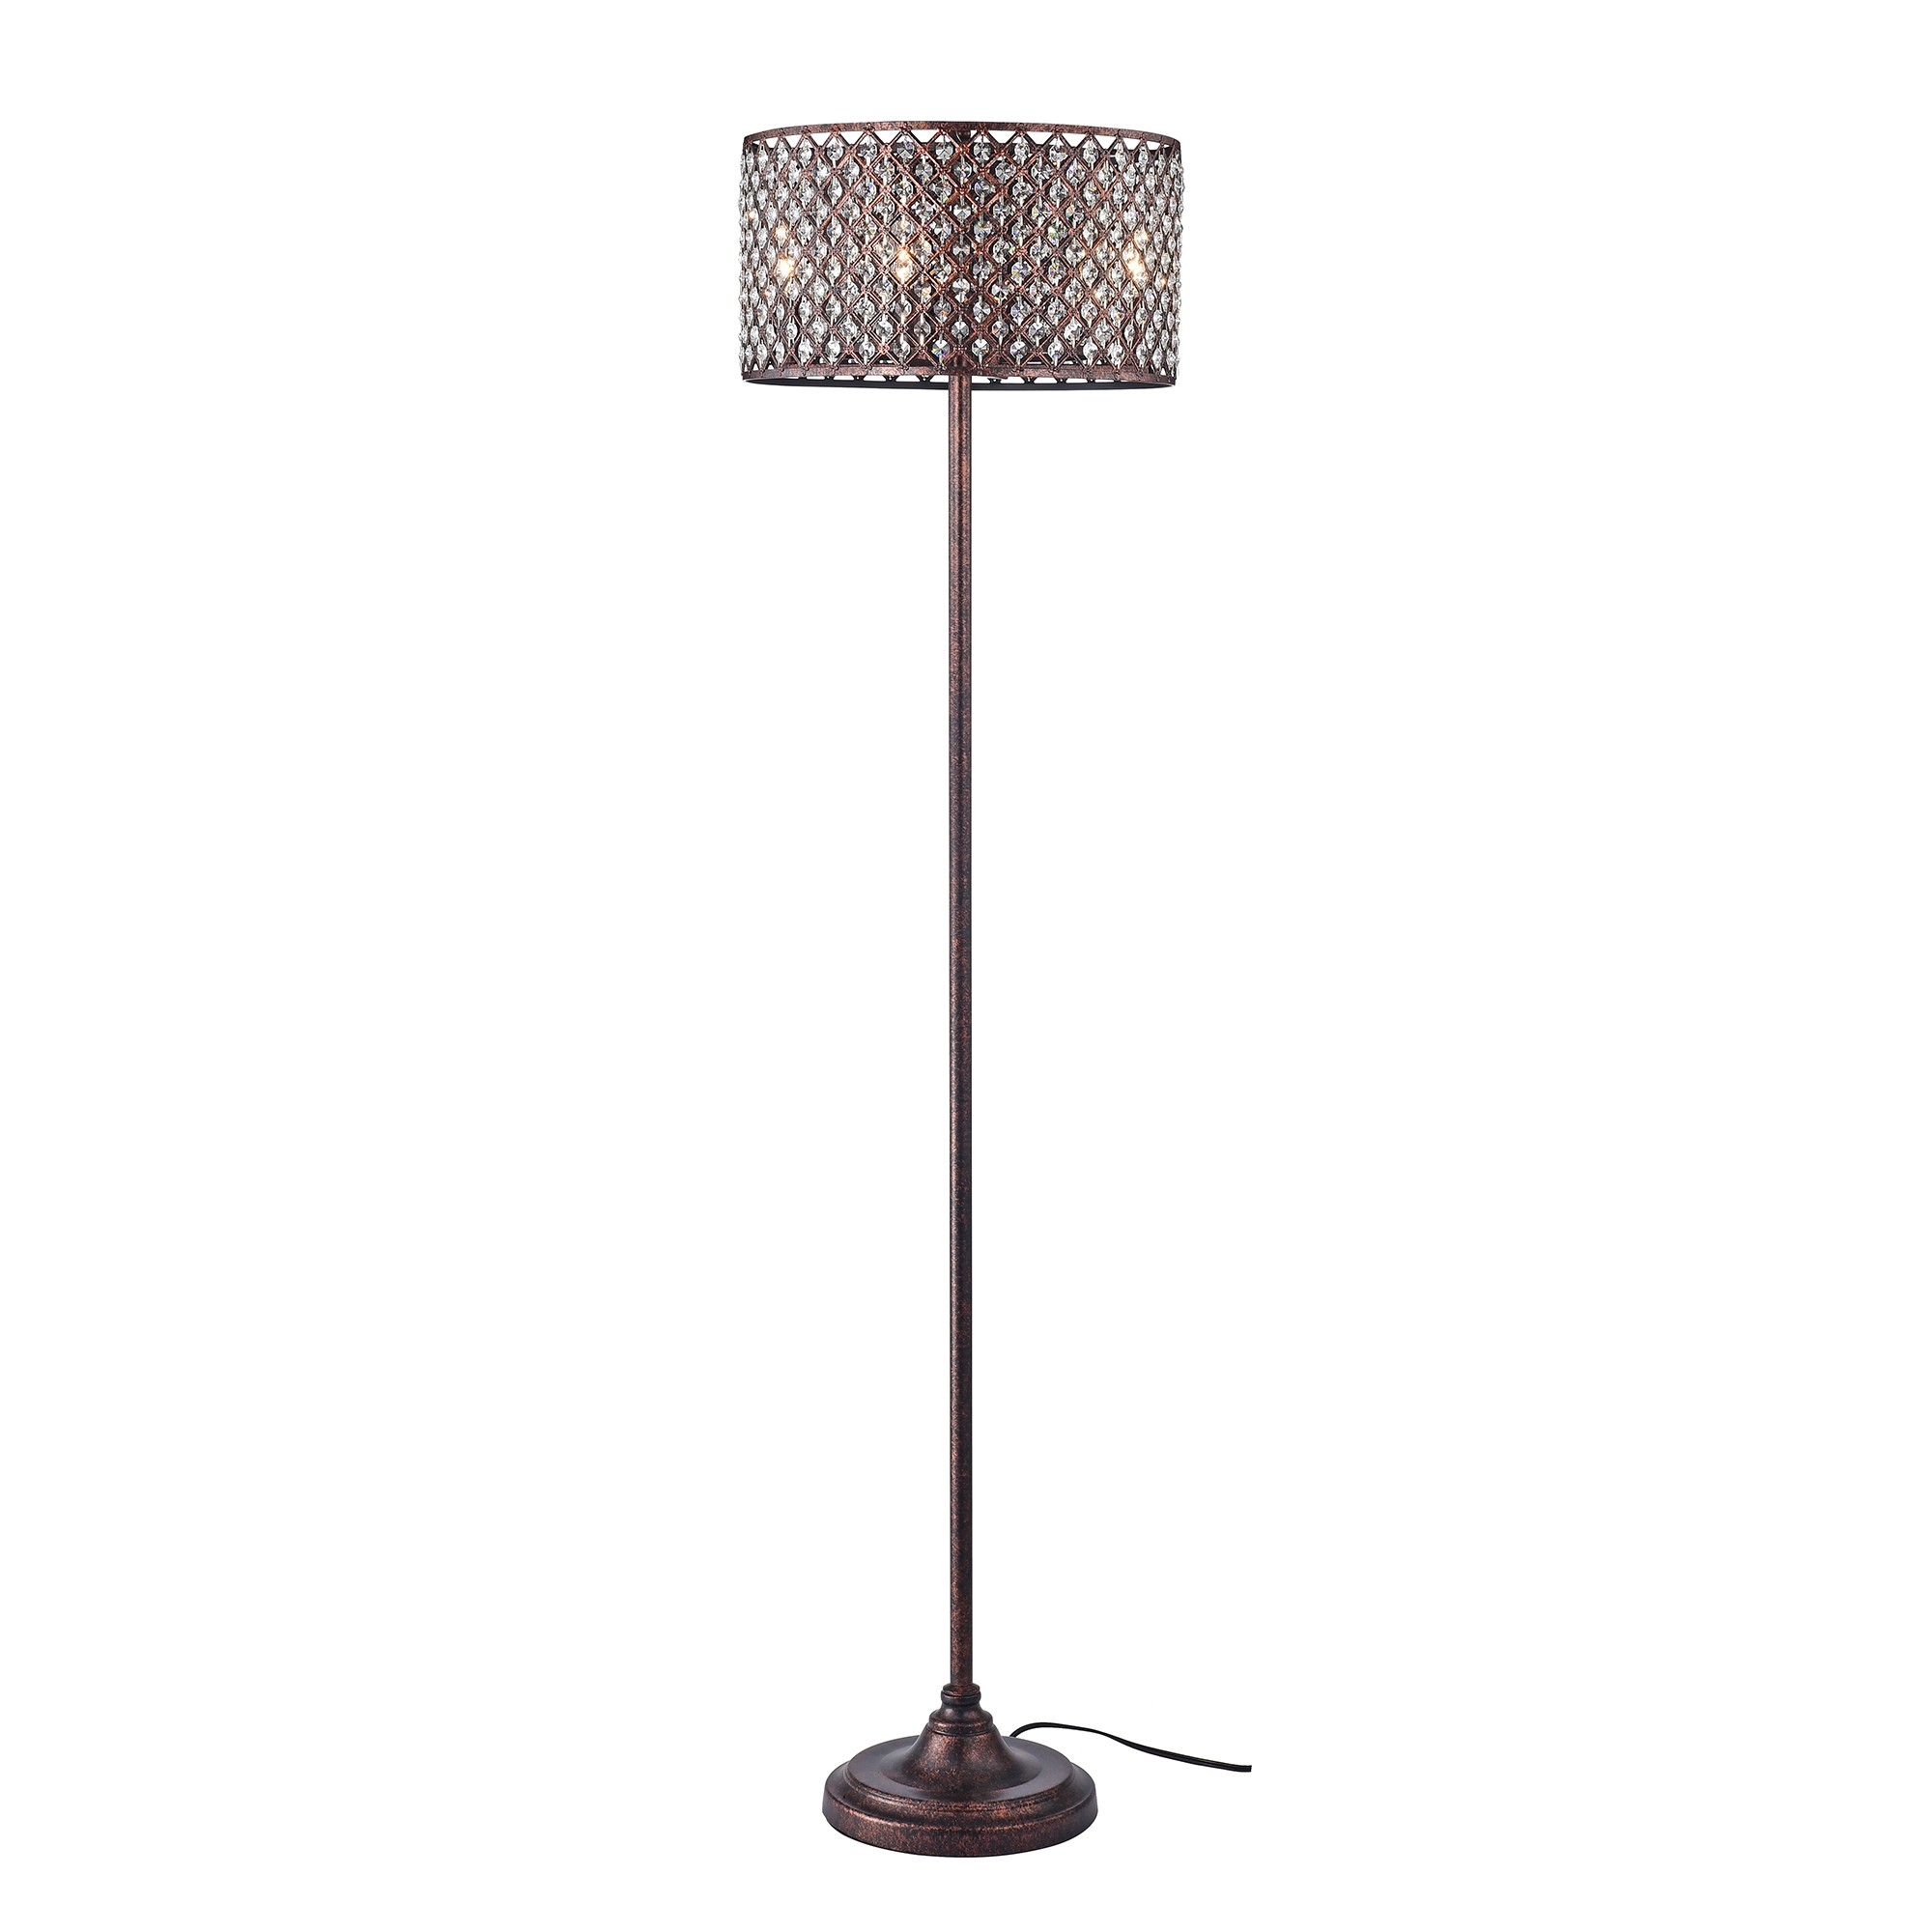 Hayward Antique Copper 4-Light Crystal Drum Shade Floor Lamp